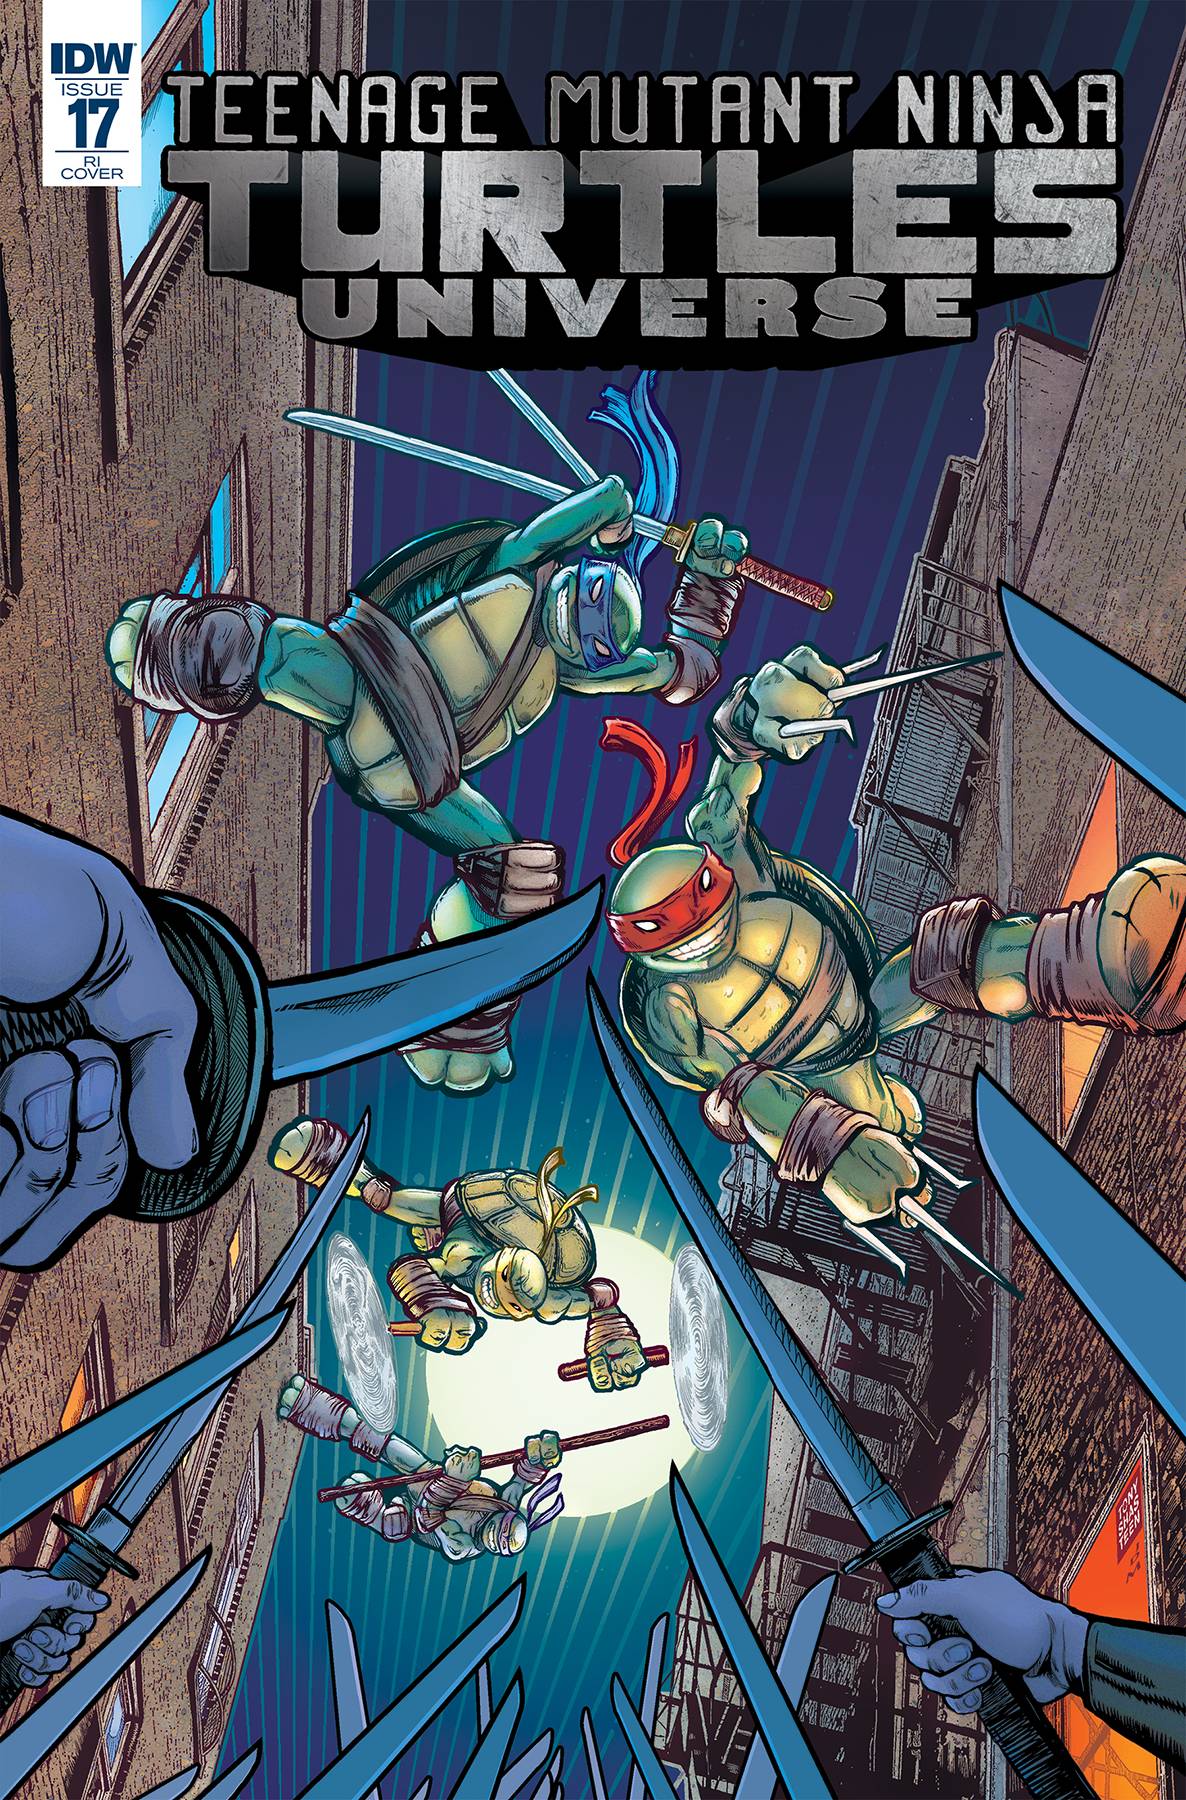 Teenage Mutant Ninja Turtles Universe #17 1 for 10 Incentive